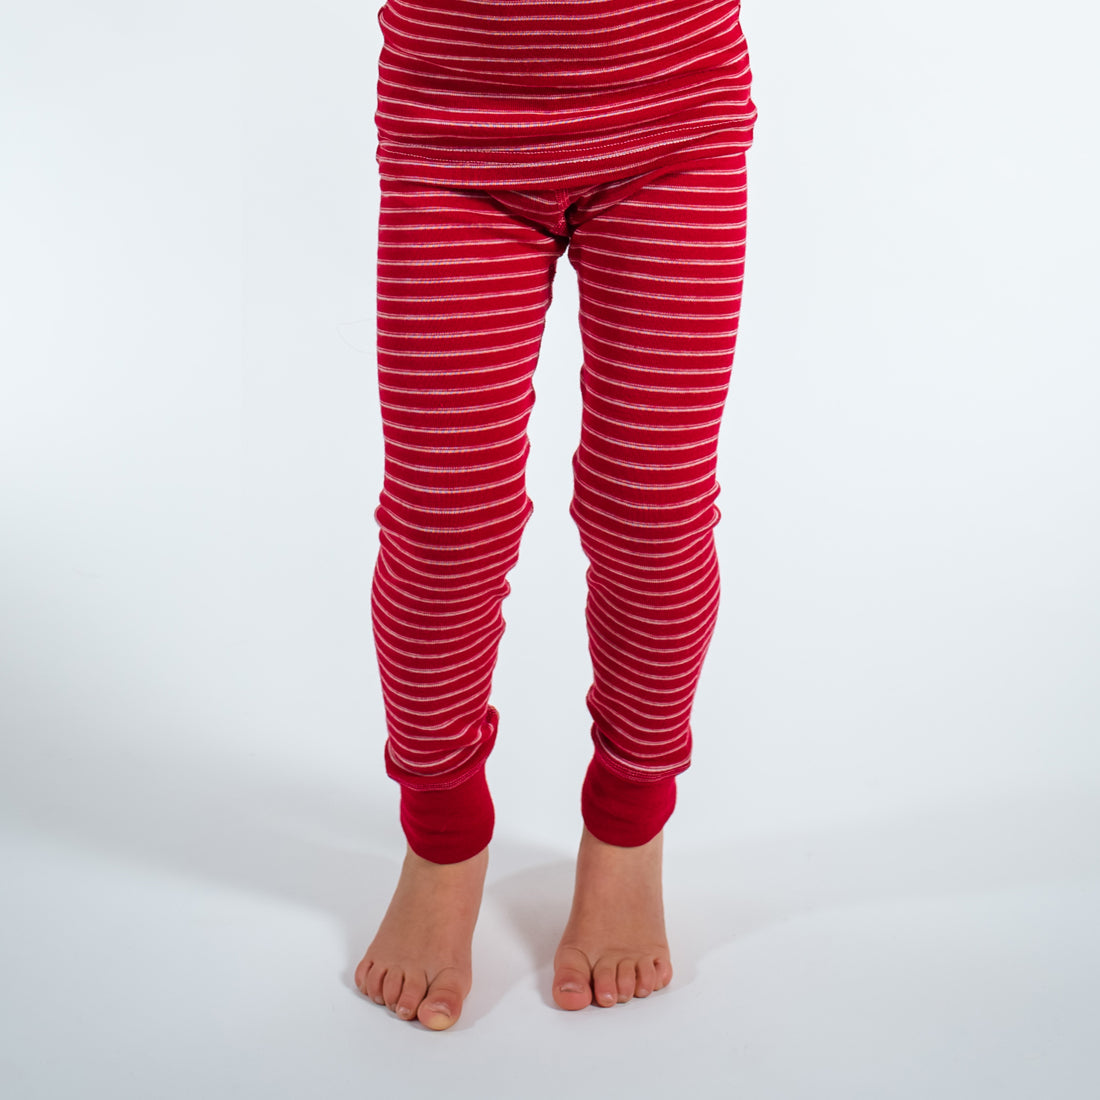 Hocosa Women's Long Underwear Pants in Organic – Danish Woolen Delight